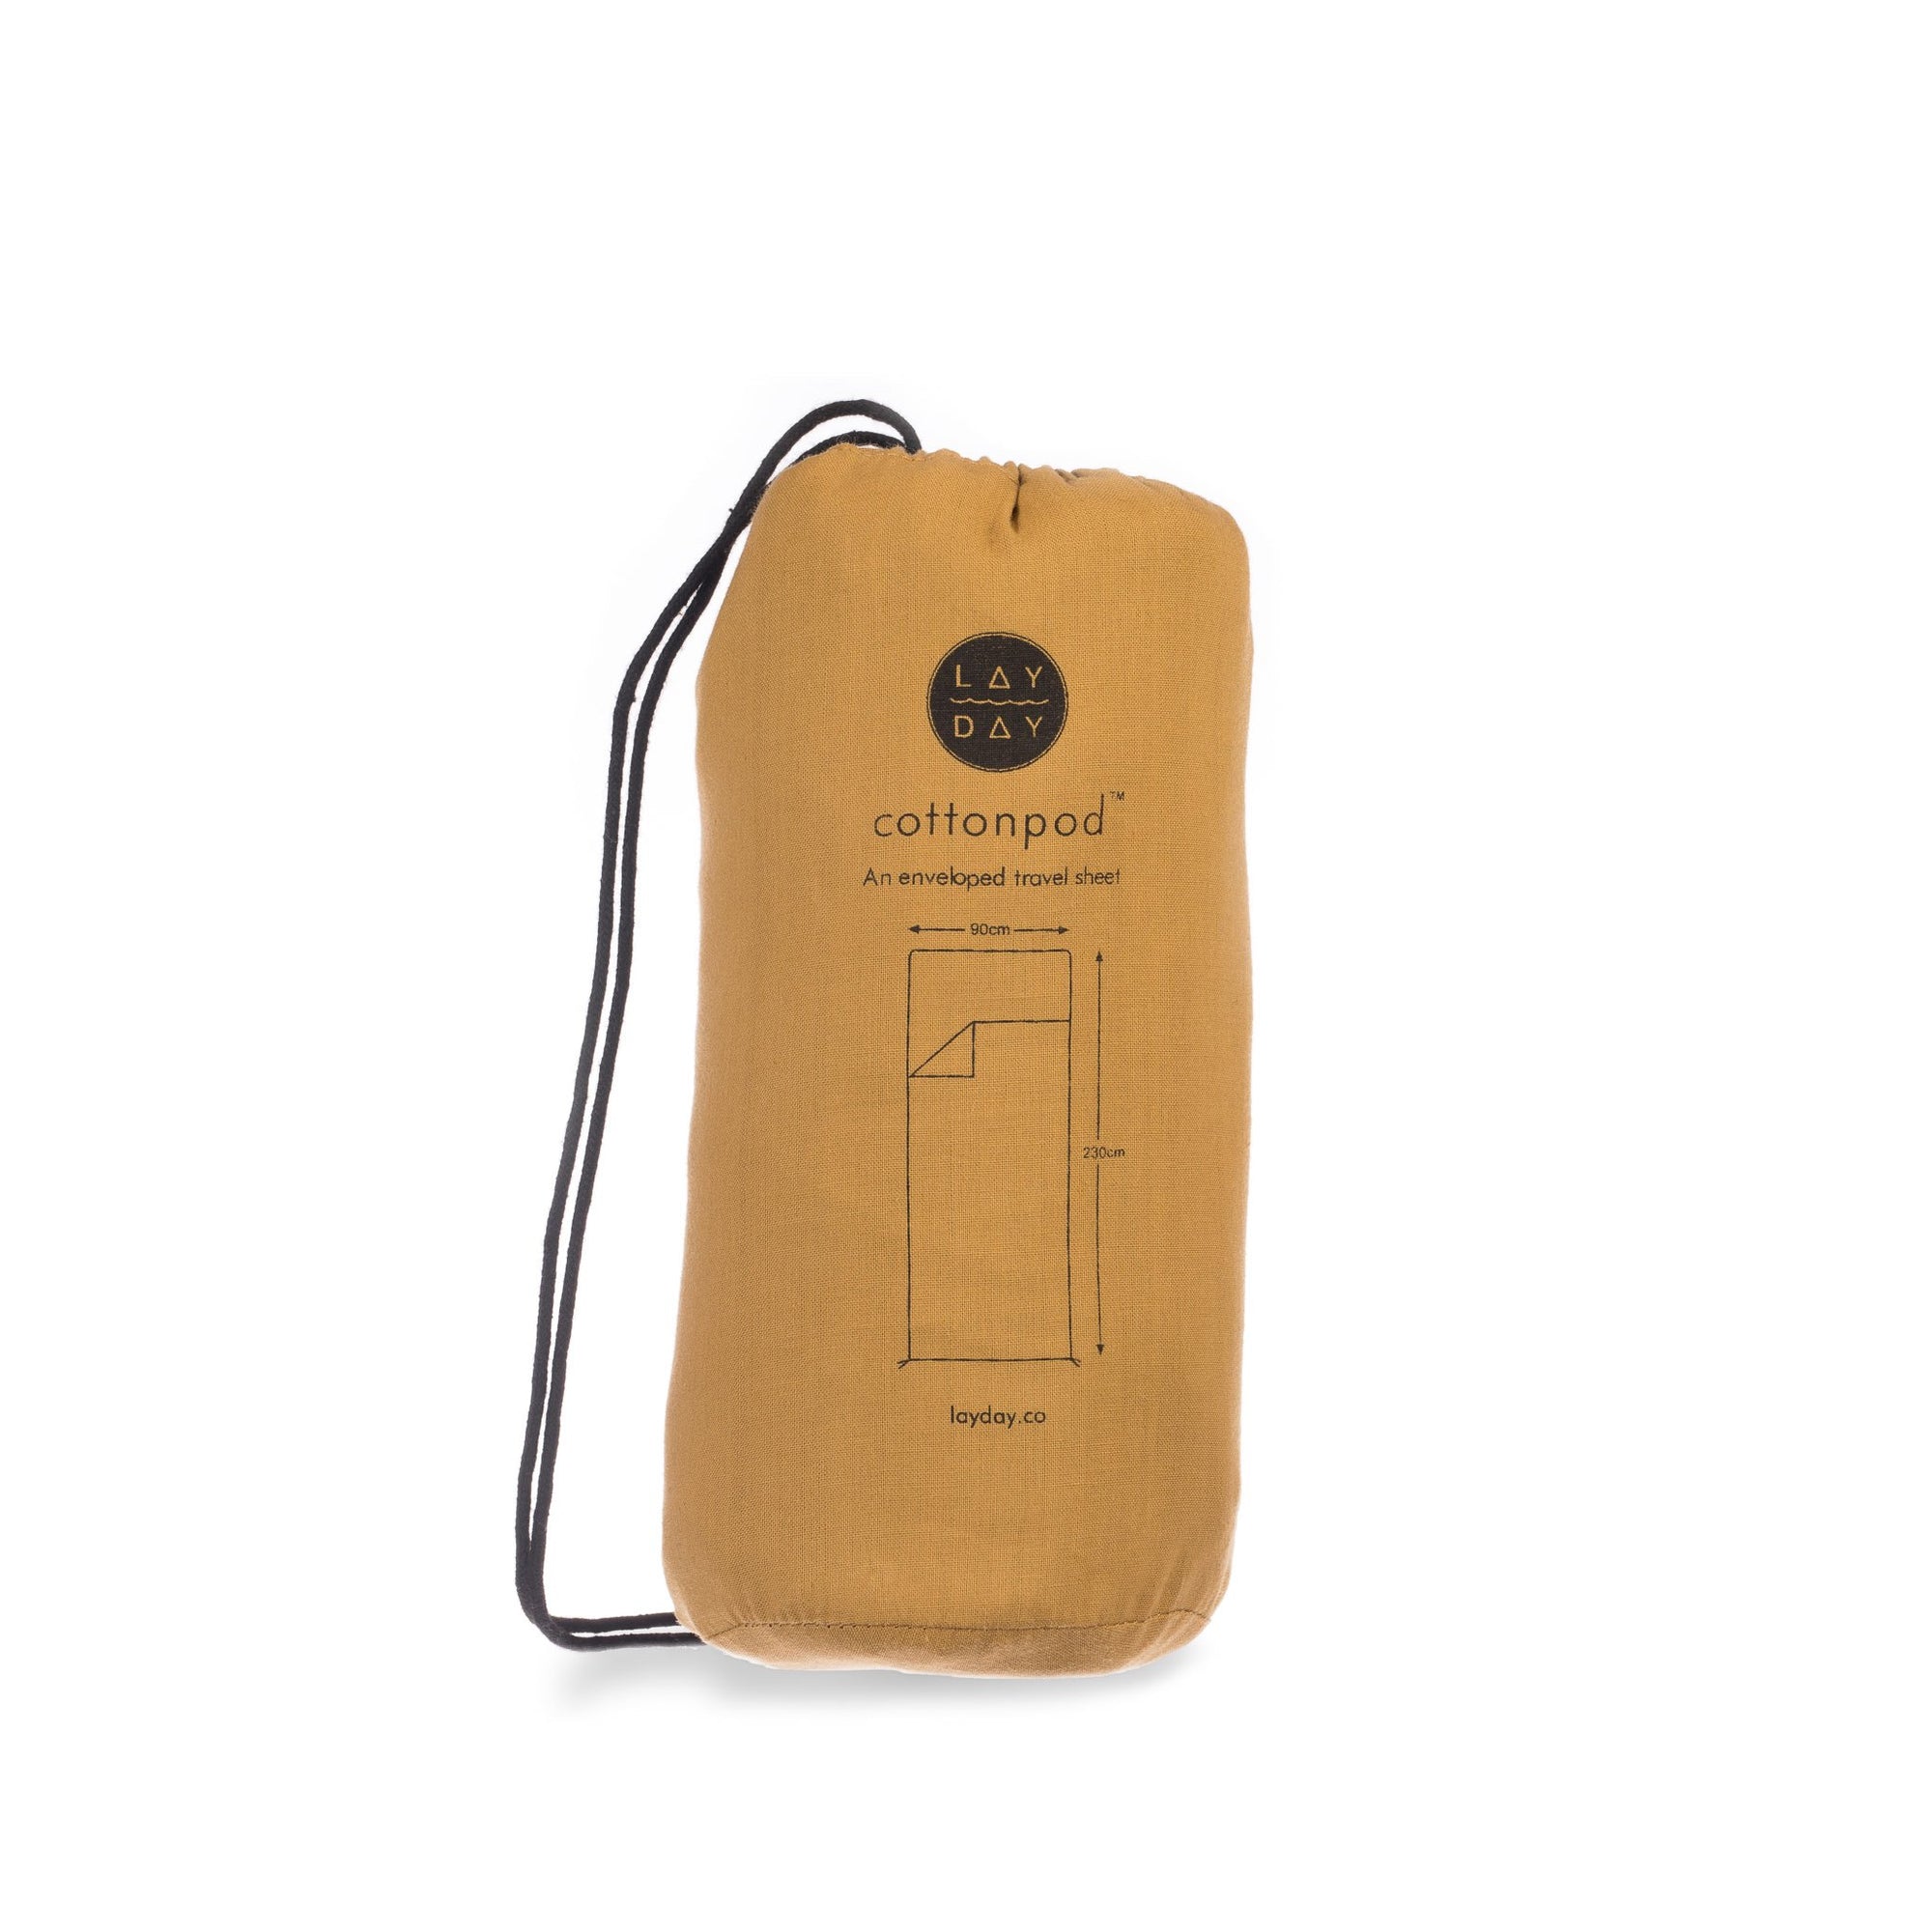 Cottonpod sleeping bag liner & travel sheet whisky - Board Store Layday™Sleeping Bag Liner  